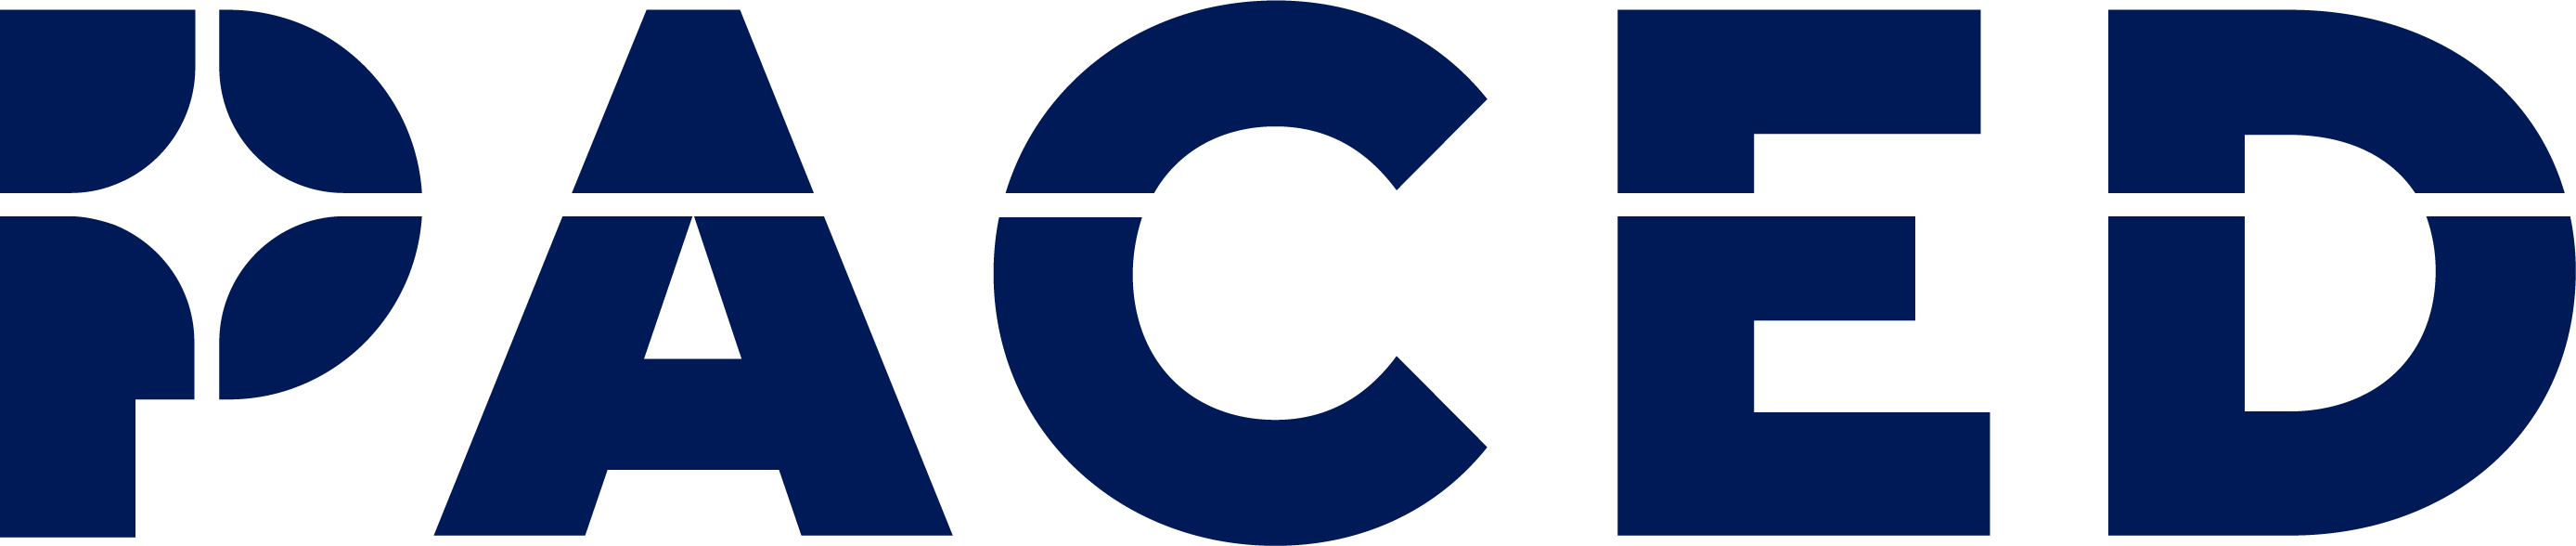 The Foundation For Palliative Care Education logo